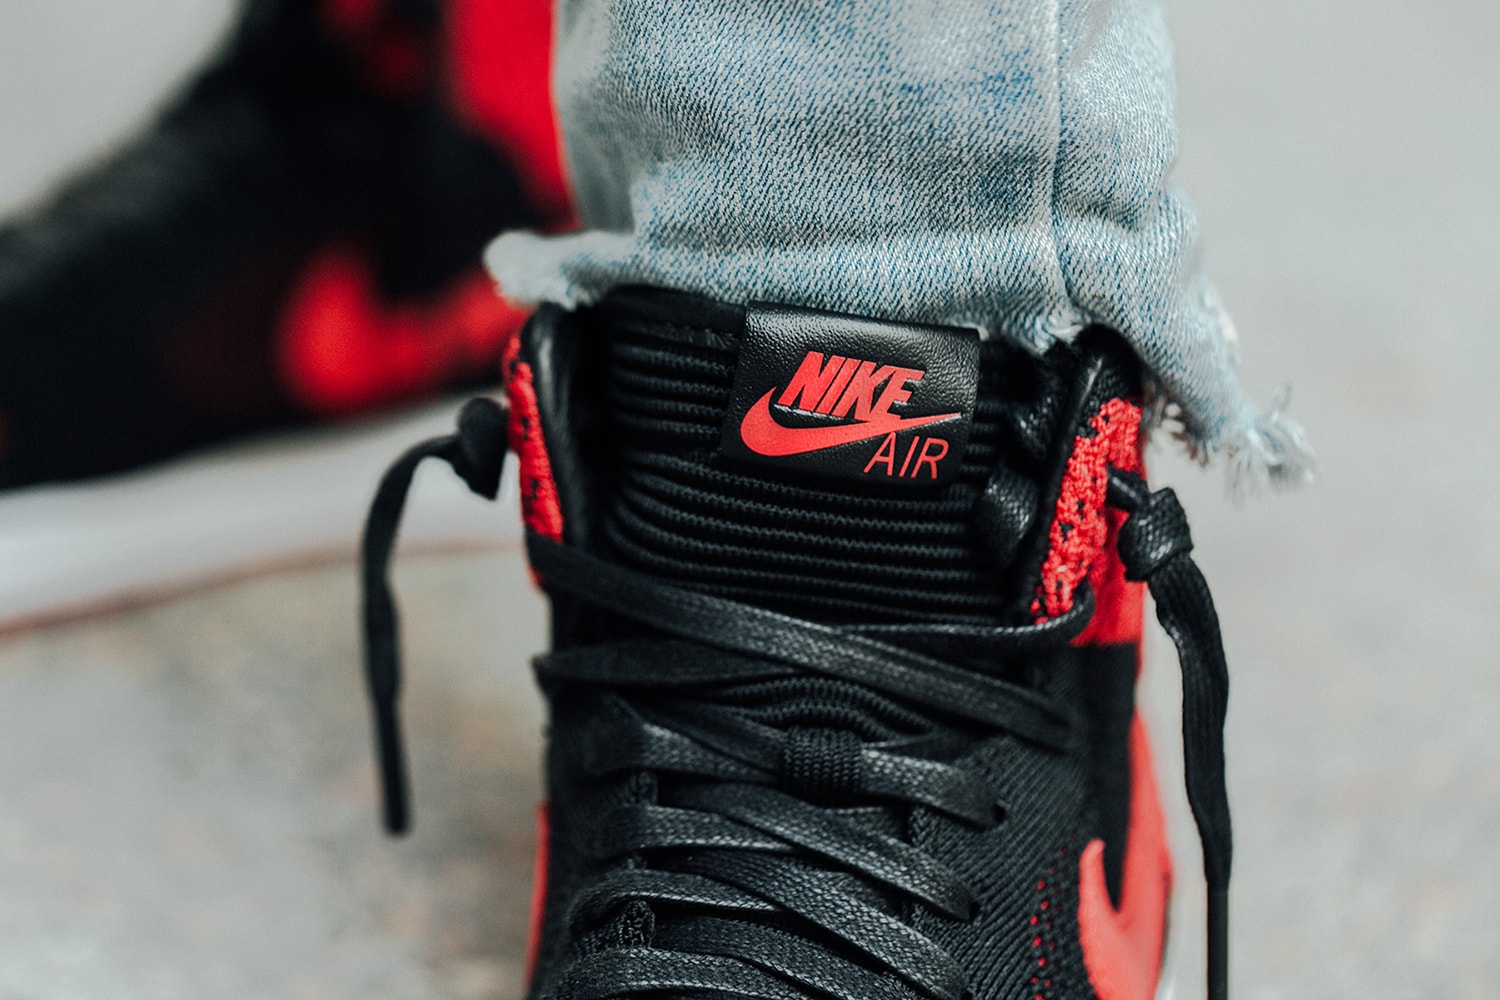 Air Jordan 1 Flyknit Bred Black White Varsity Red Detailed Look Michael Jordan sneakers Jordan Brand Closer Look